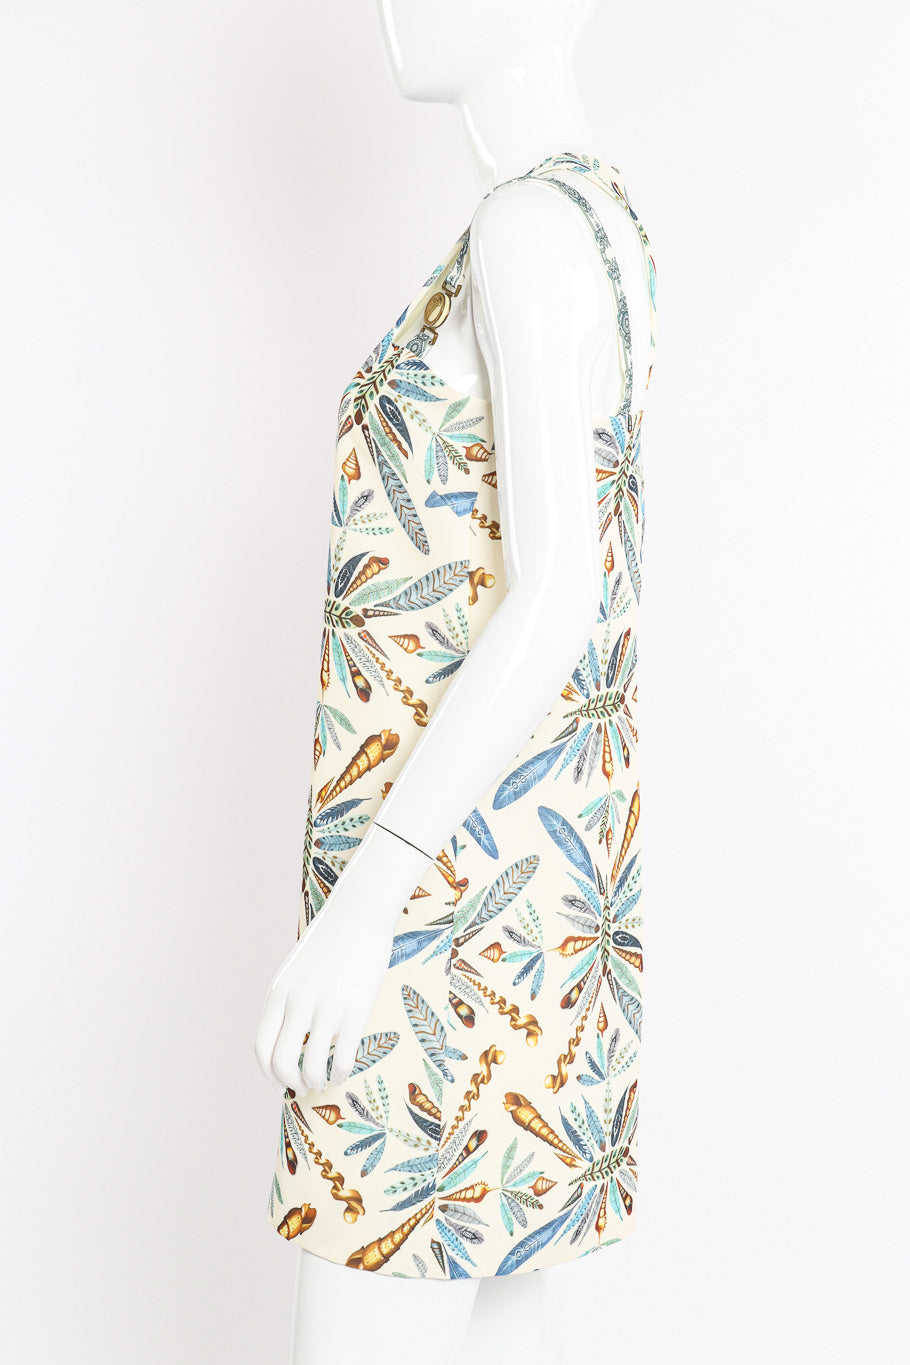 Versace Plume Print Mini Dress side view closeup on mannequin @Recessla